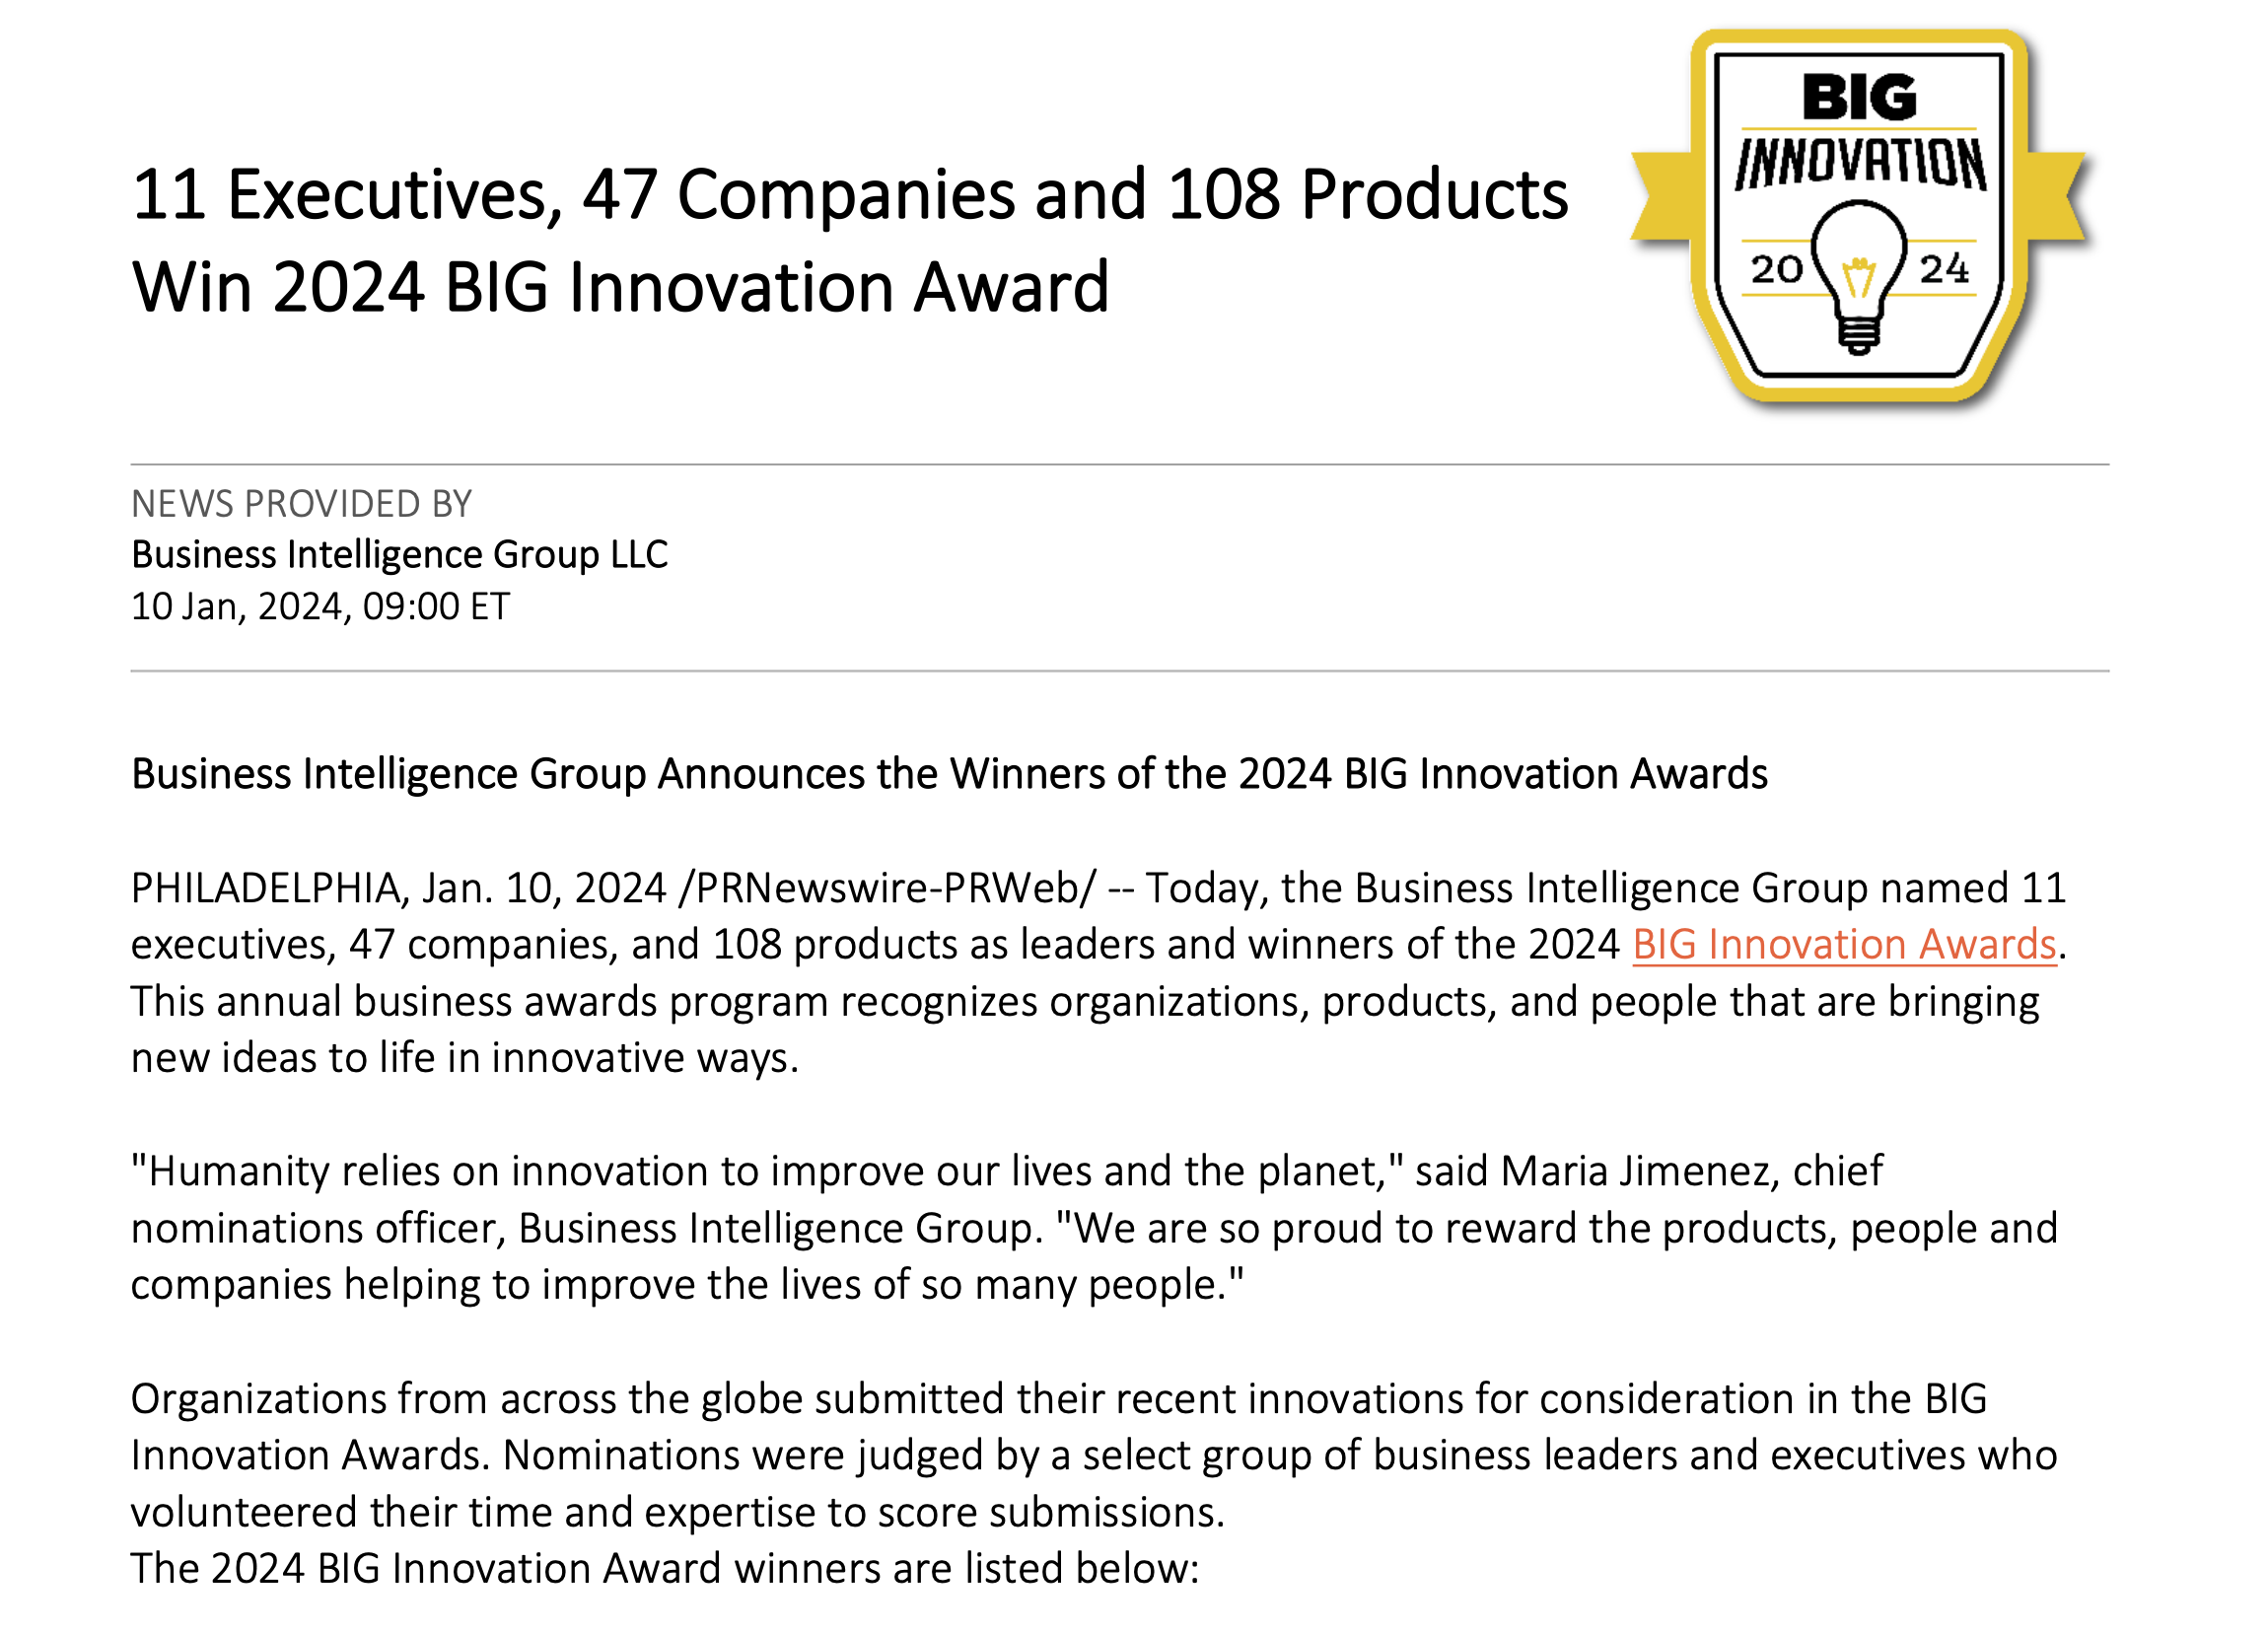 11 Executives 47 Companies and 108 Products Win 2024 BIG Innovation Award